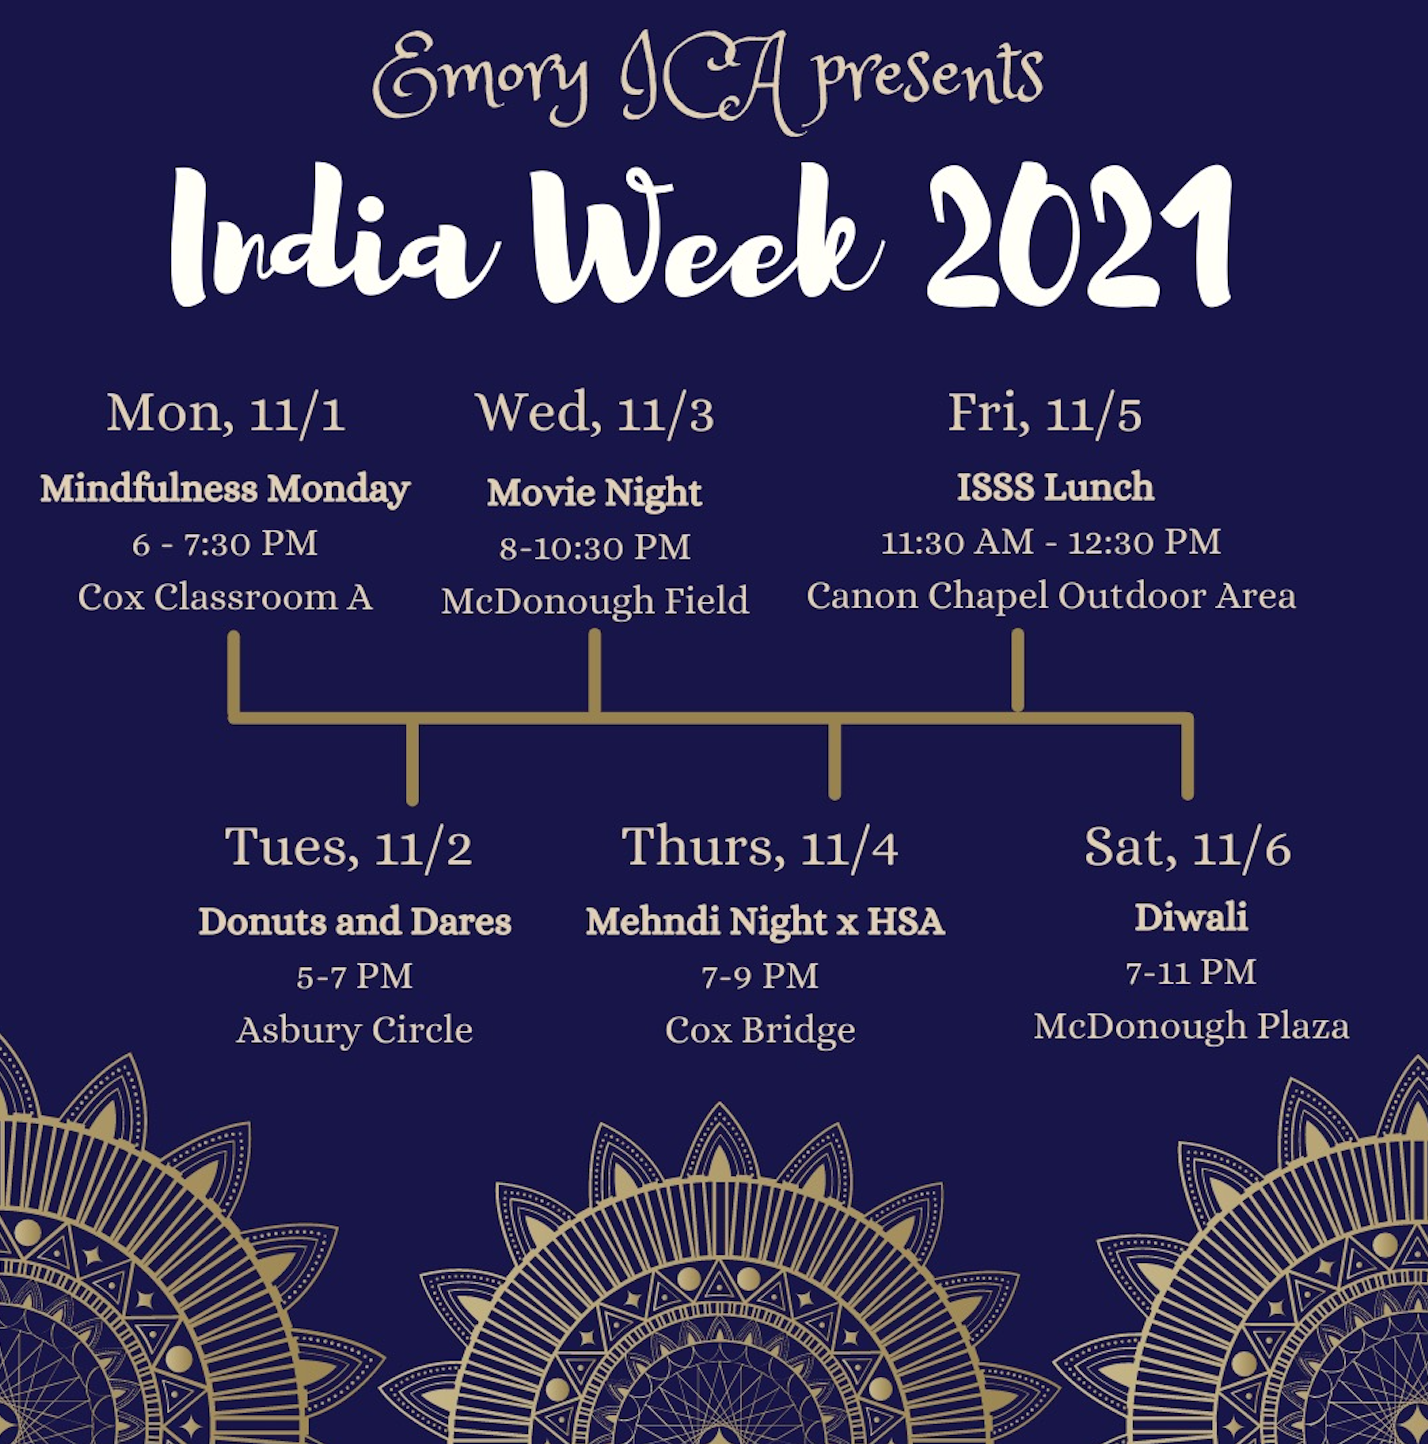 India week